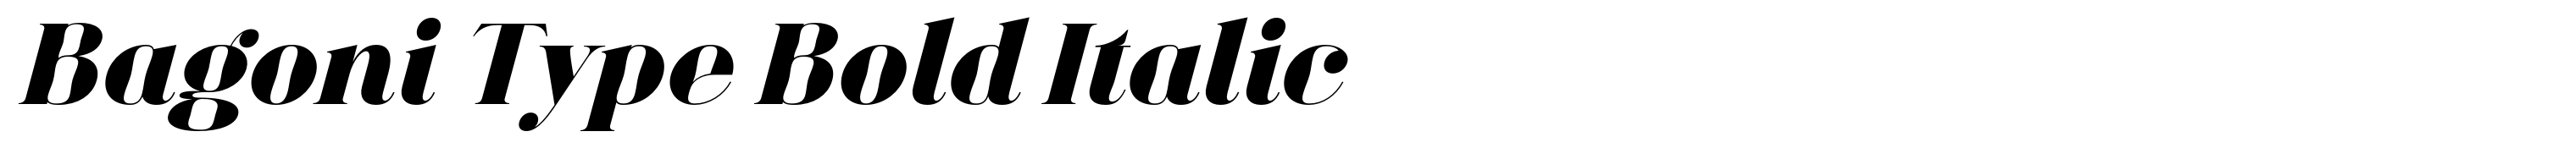 Bagoni Type Bold Italic